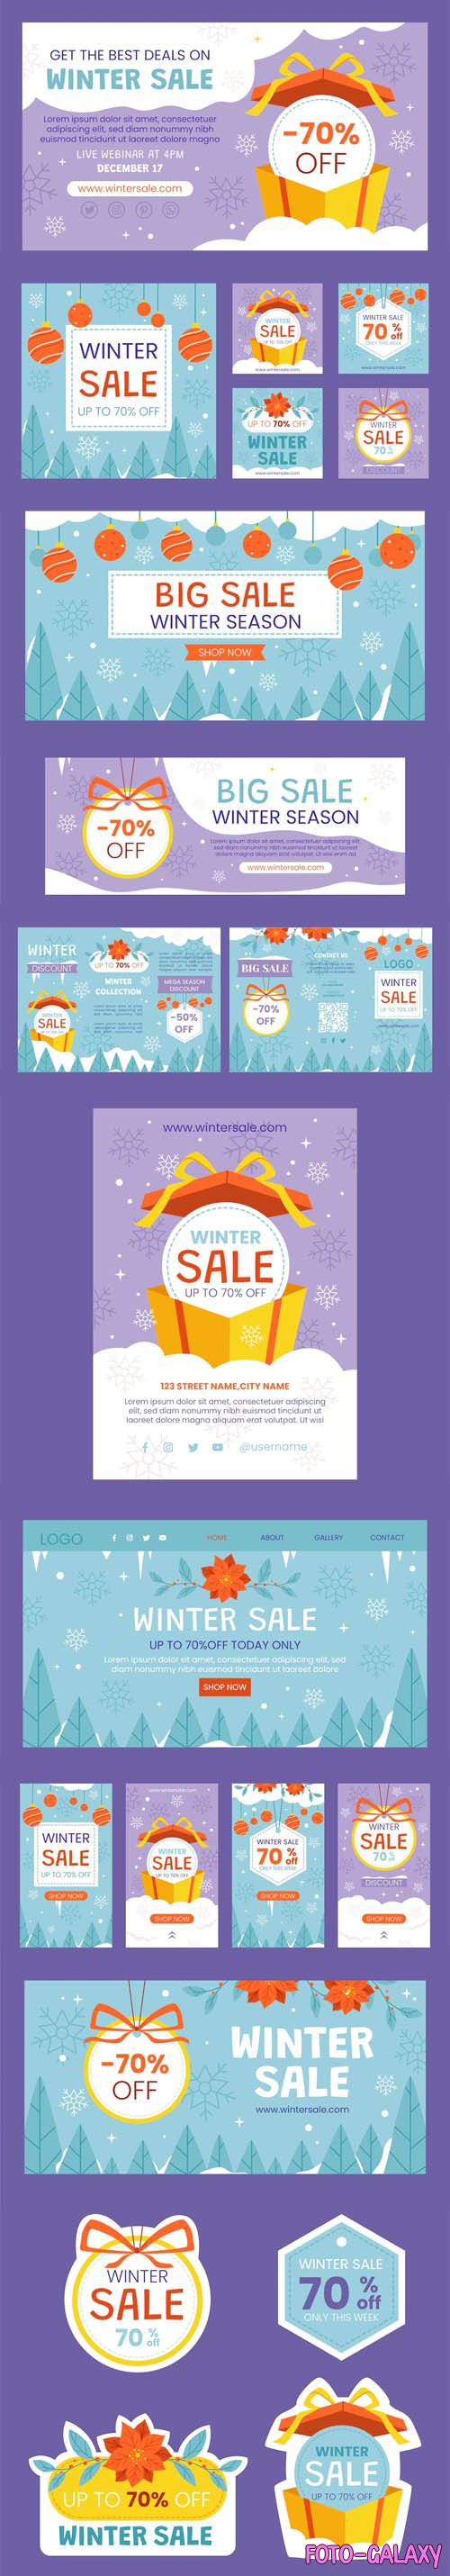 Hand Drawn Winter Sales Flat Marketing Pack Vector Templates